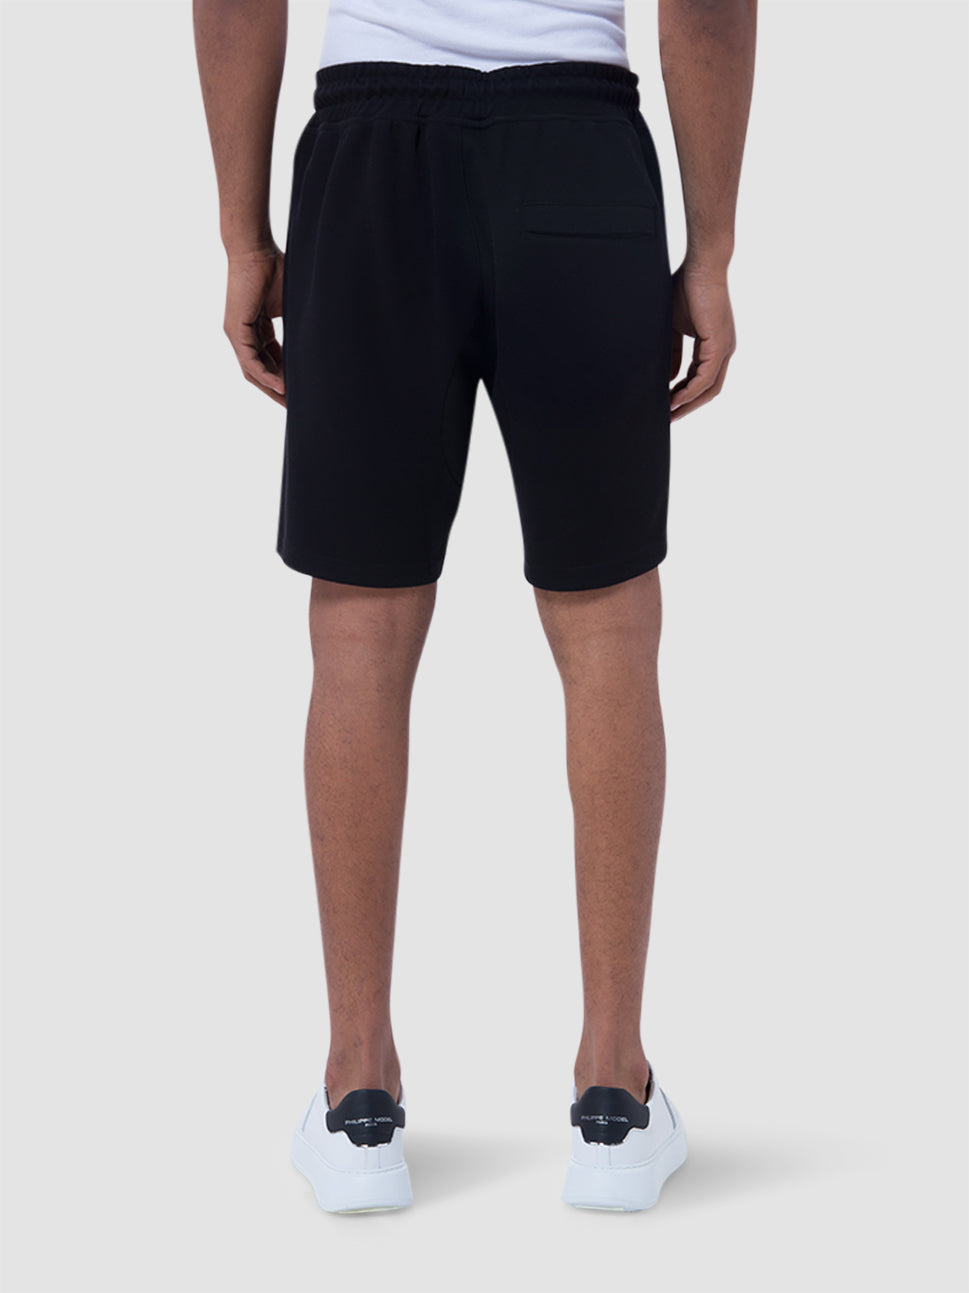 Shop the latest trending Black color Balr Shorts Online in UAE